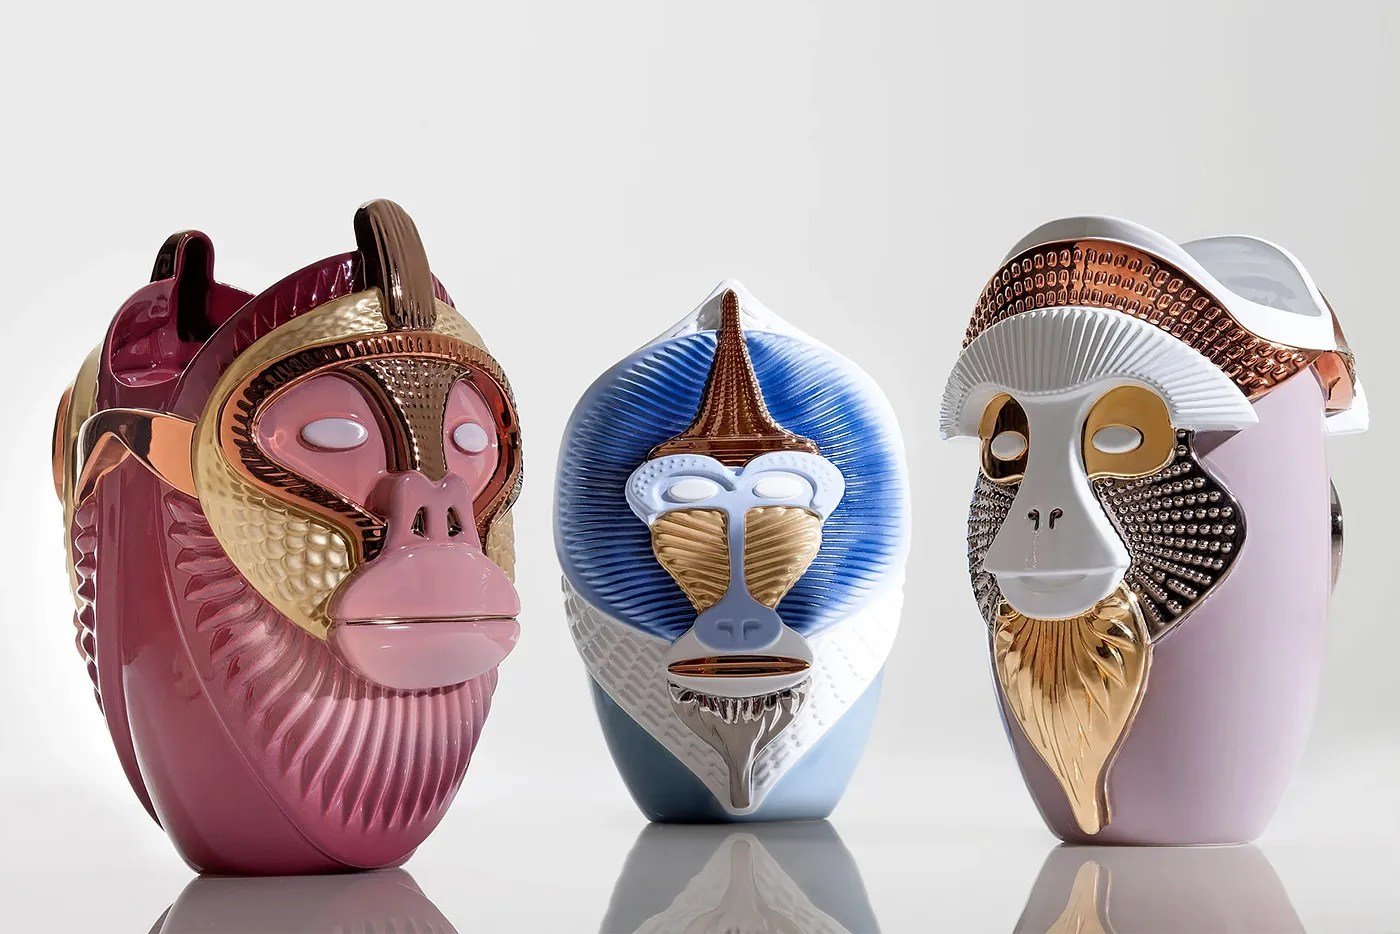 Ornate Primate Ceramic Sculptures by Elena Salmistraro